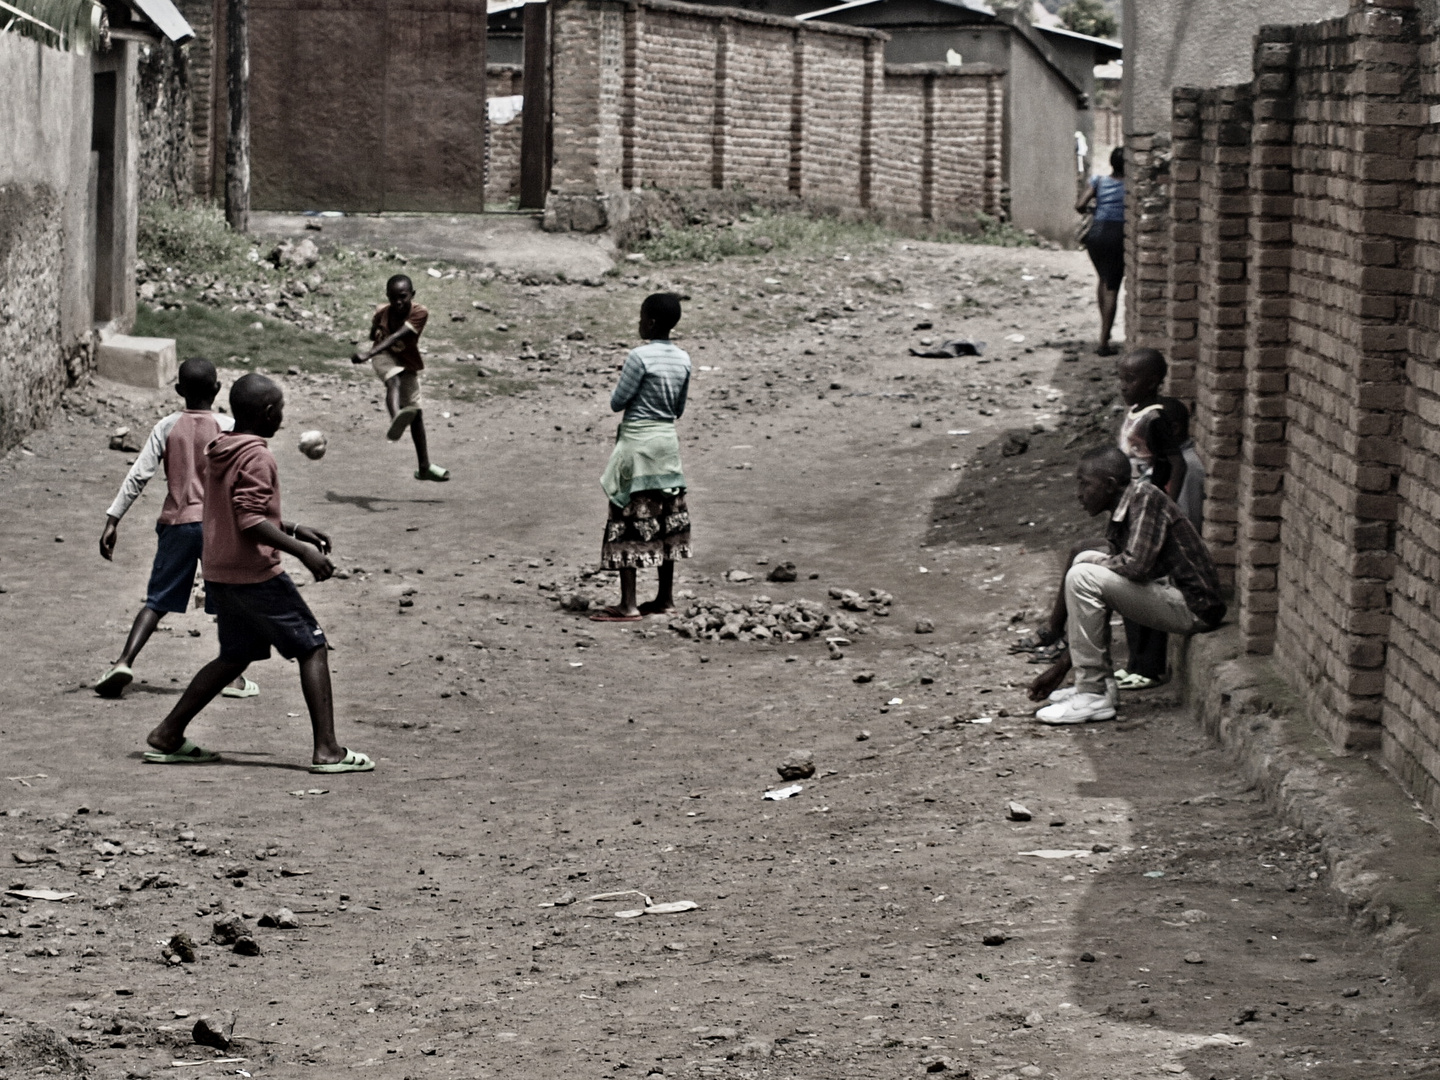 Champions League | Musanze | Rwanda | 2014